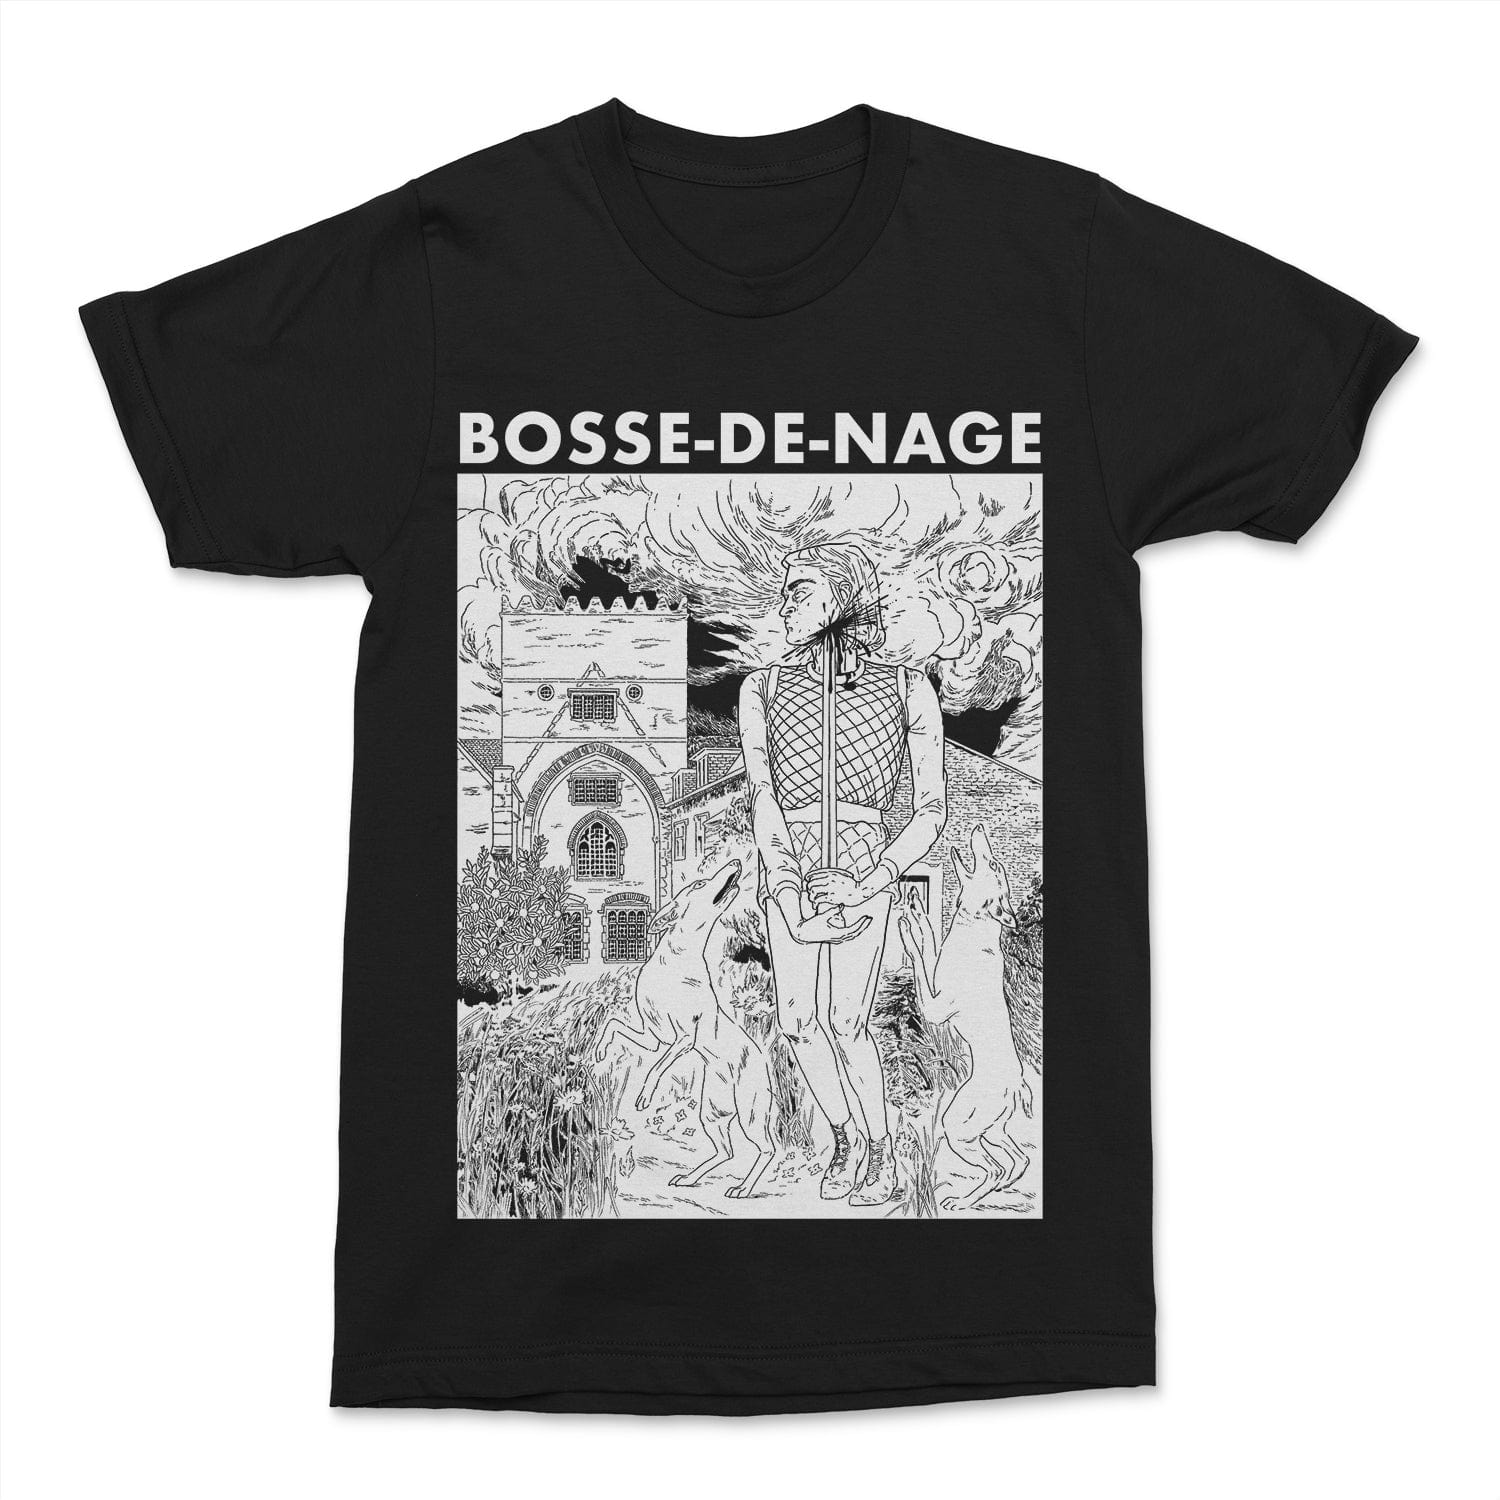 The Flenser Apparel Bosse-de-Nage "Hounds of Love" Shirt